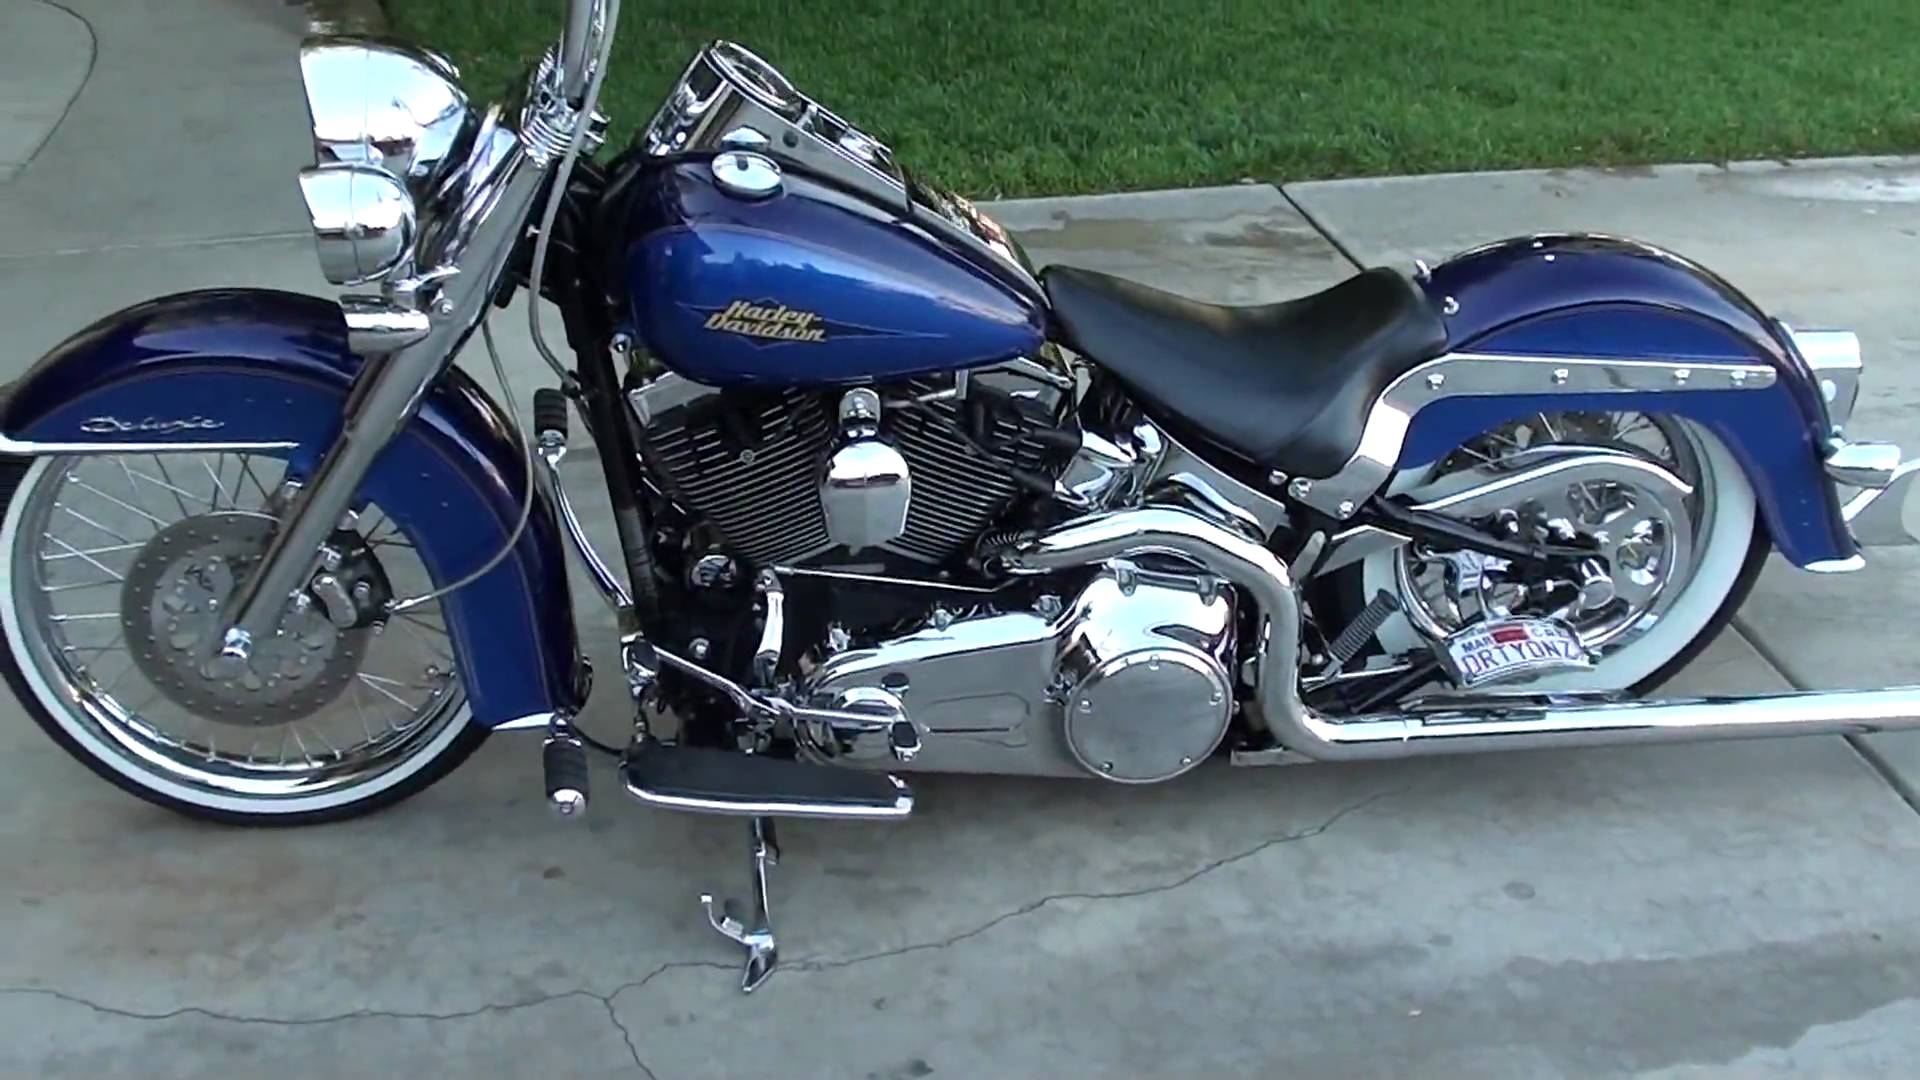 2006 Harley Davidson Flstn Softail Deluxe Image 9